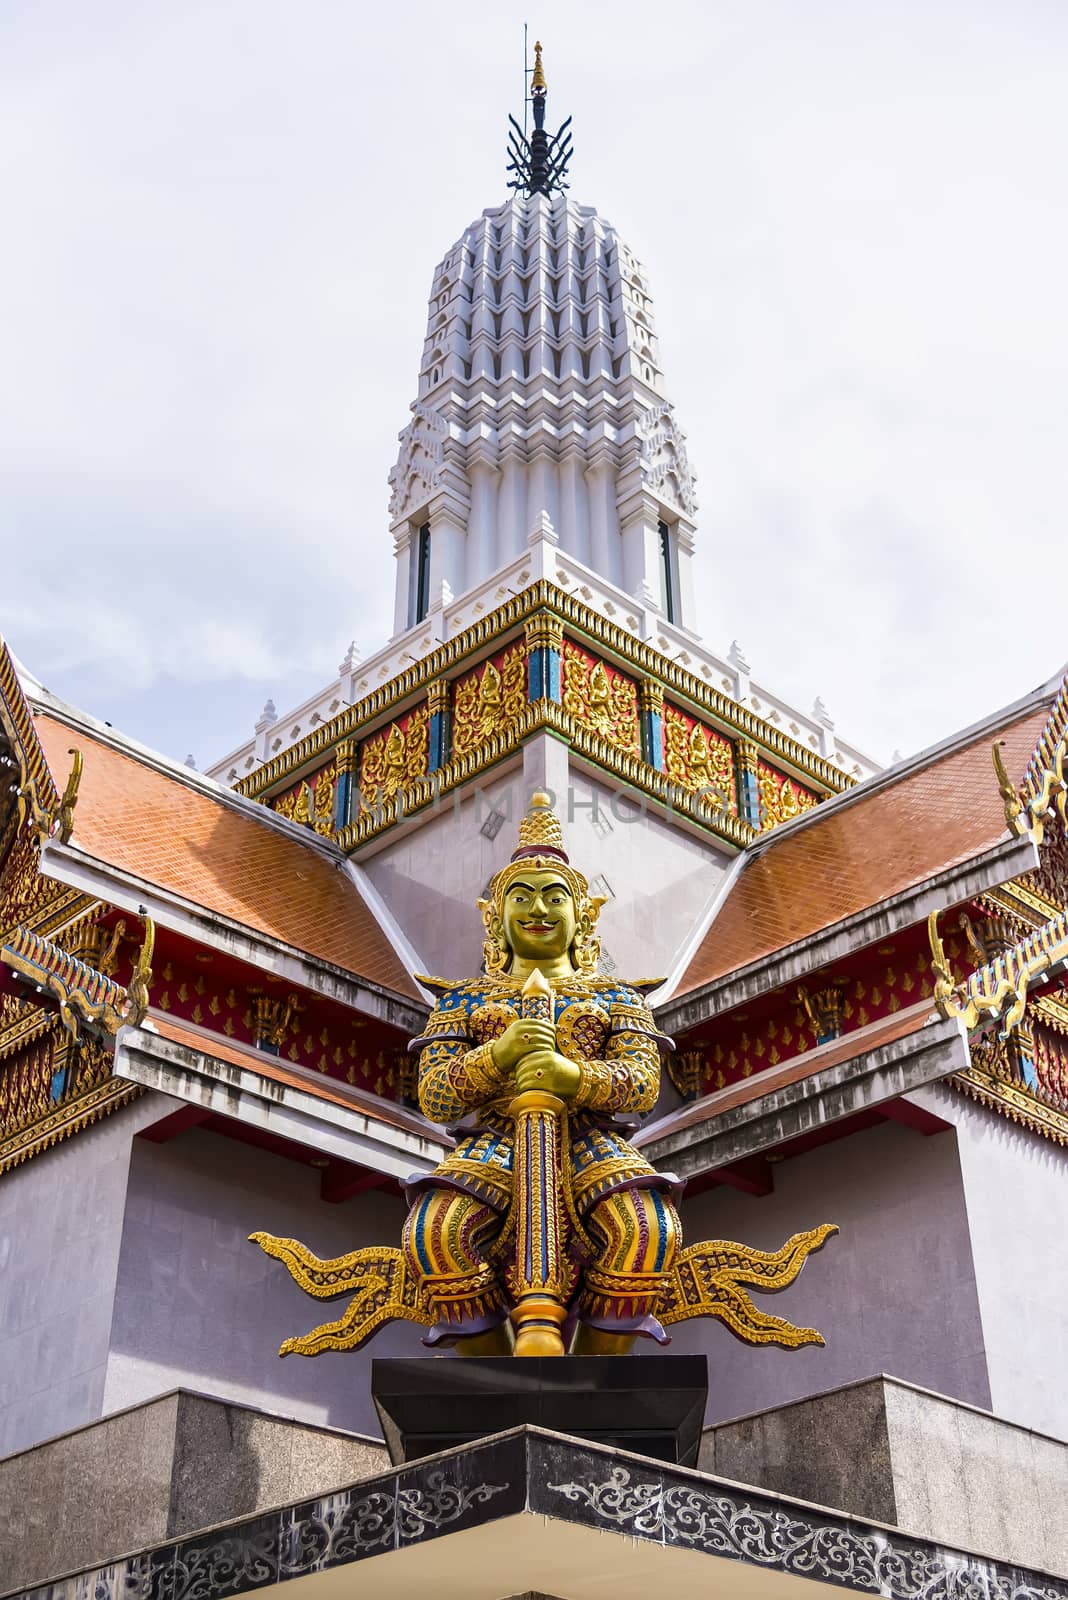 Ayutthaya Thailand June 13, 2020 : Prang of Puttaisawan temple i by Bubbers